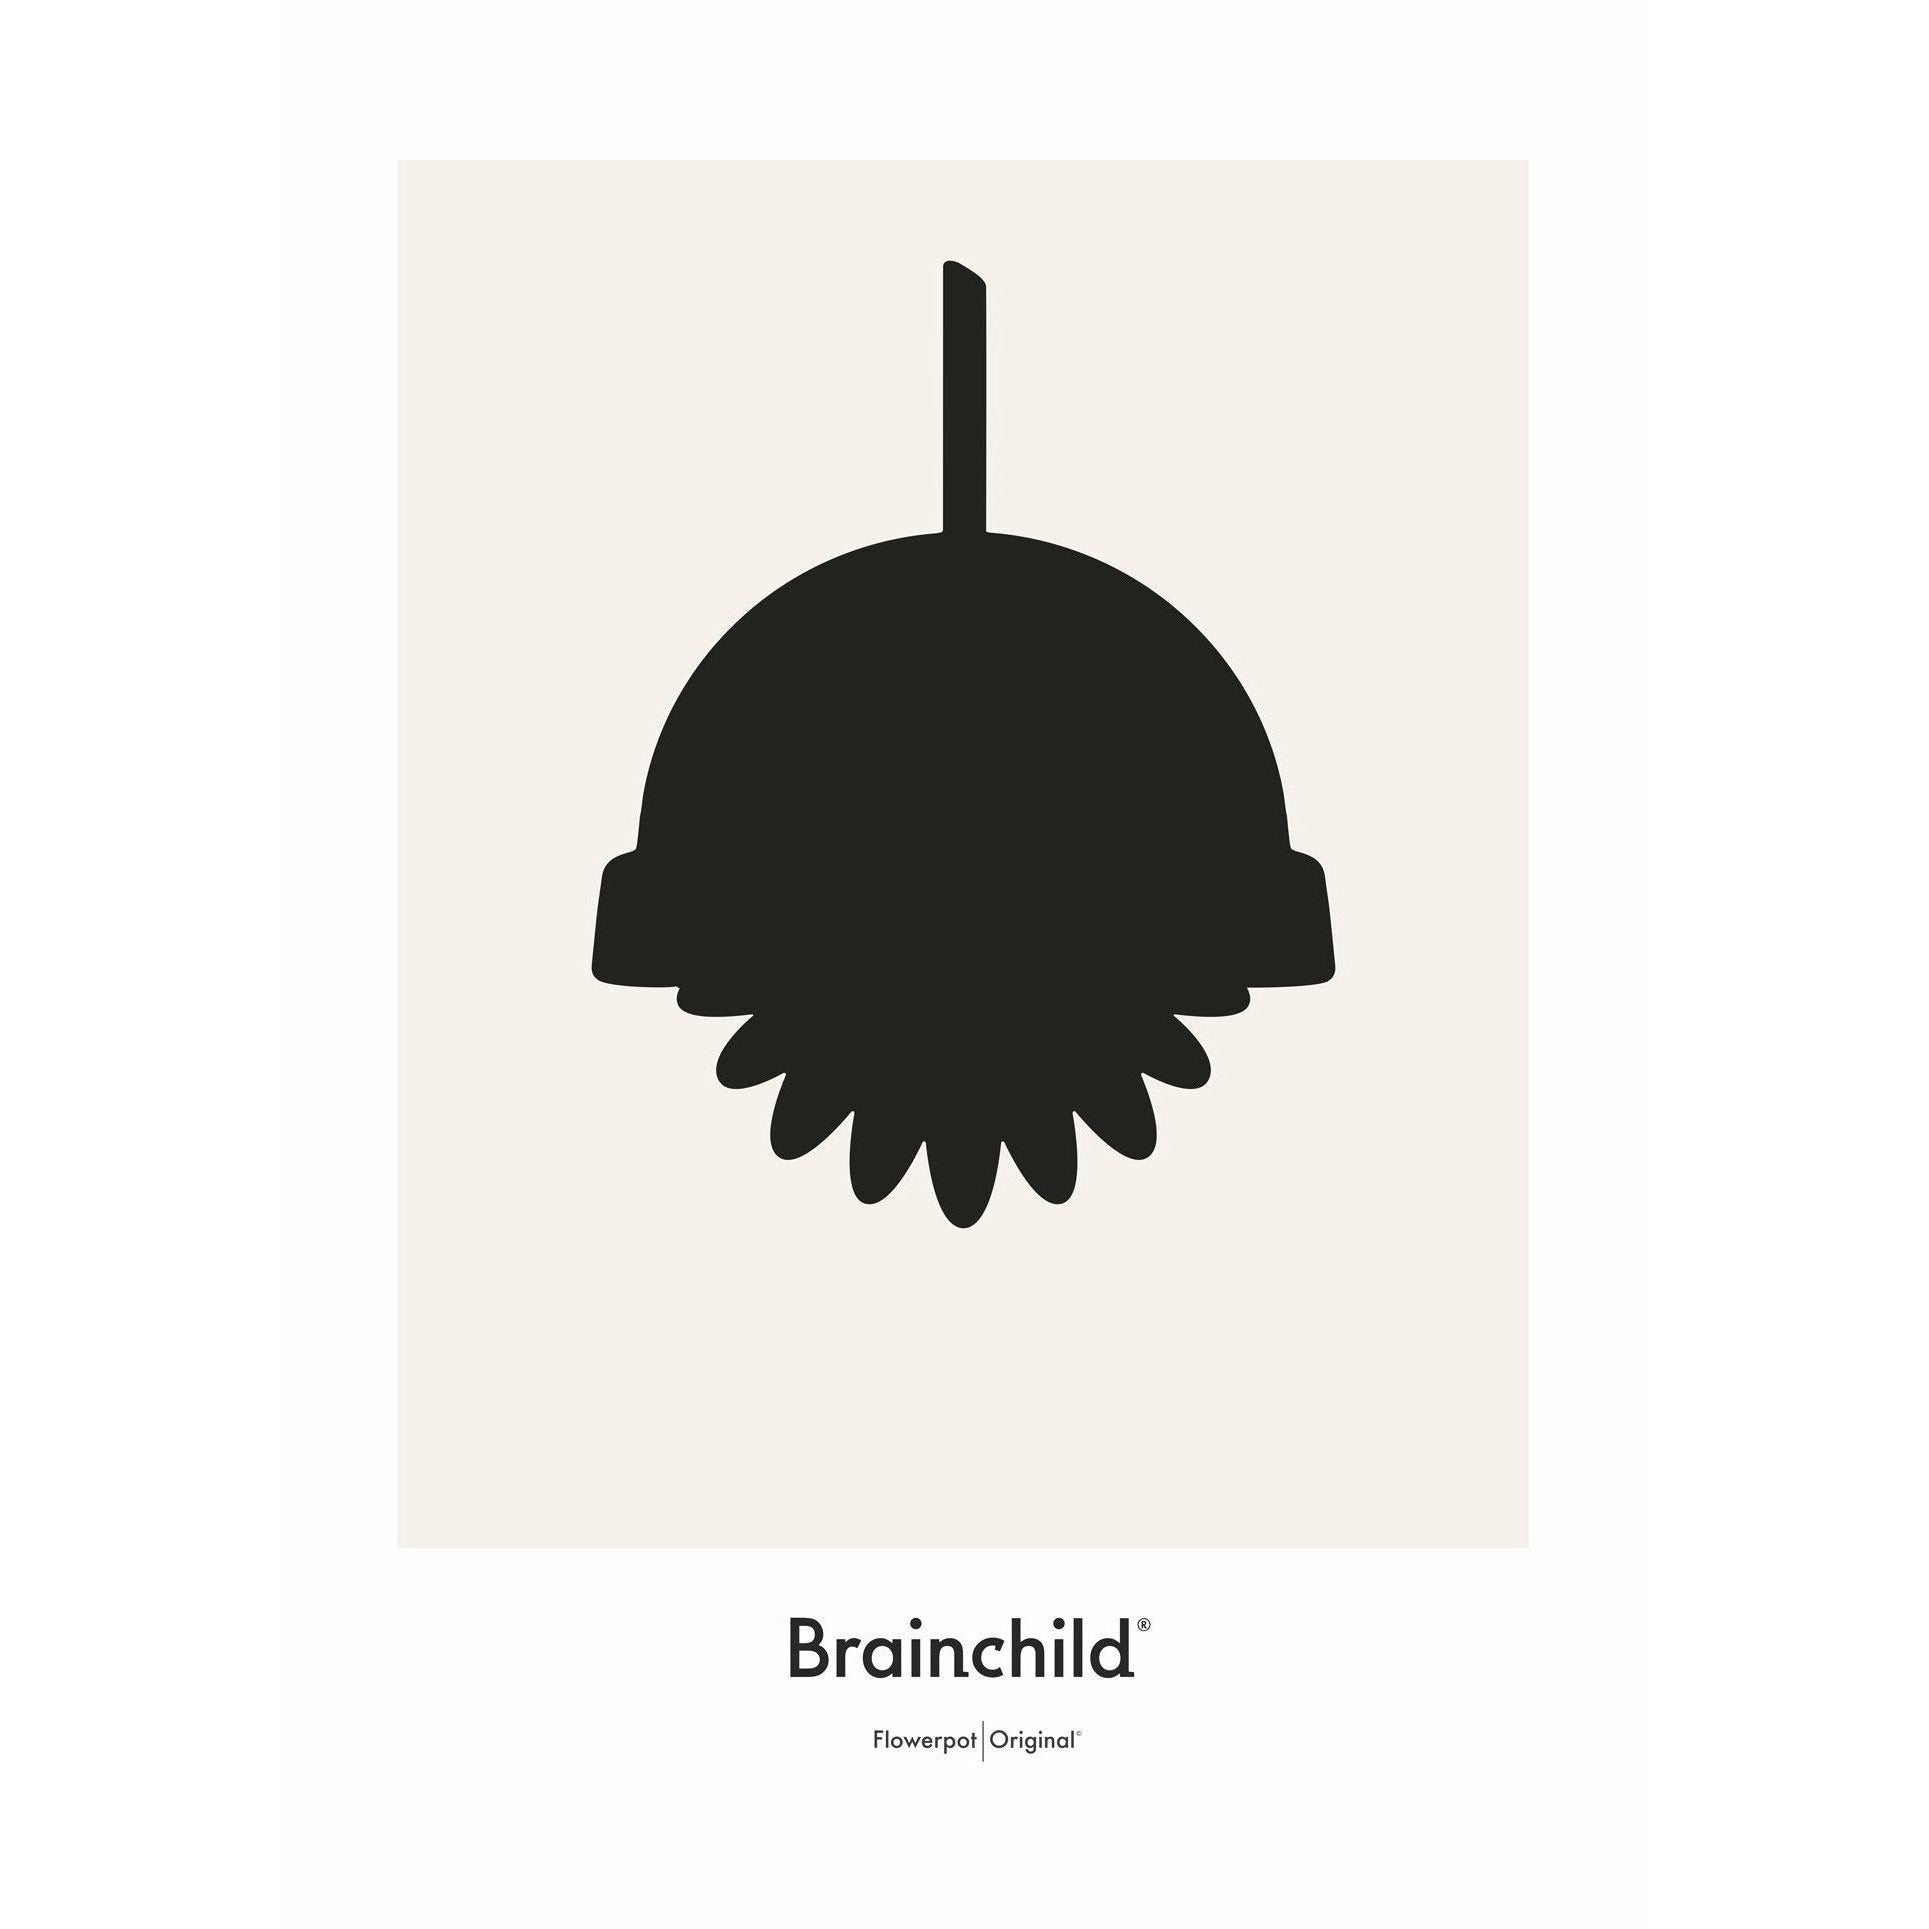 Brainchild Flowerpot Design Icon Poster Without Frame A5, Grey